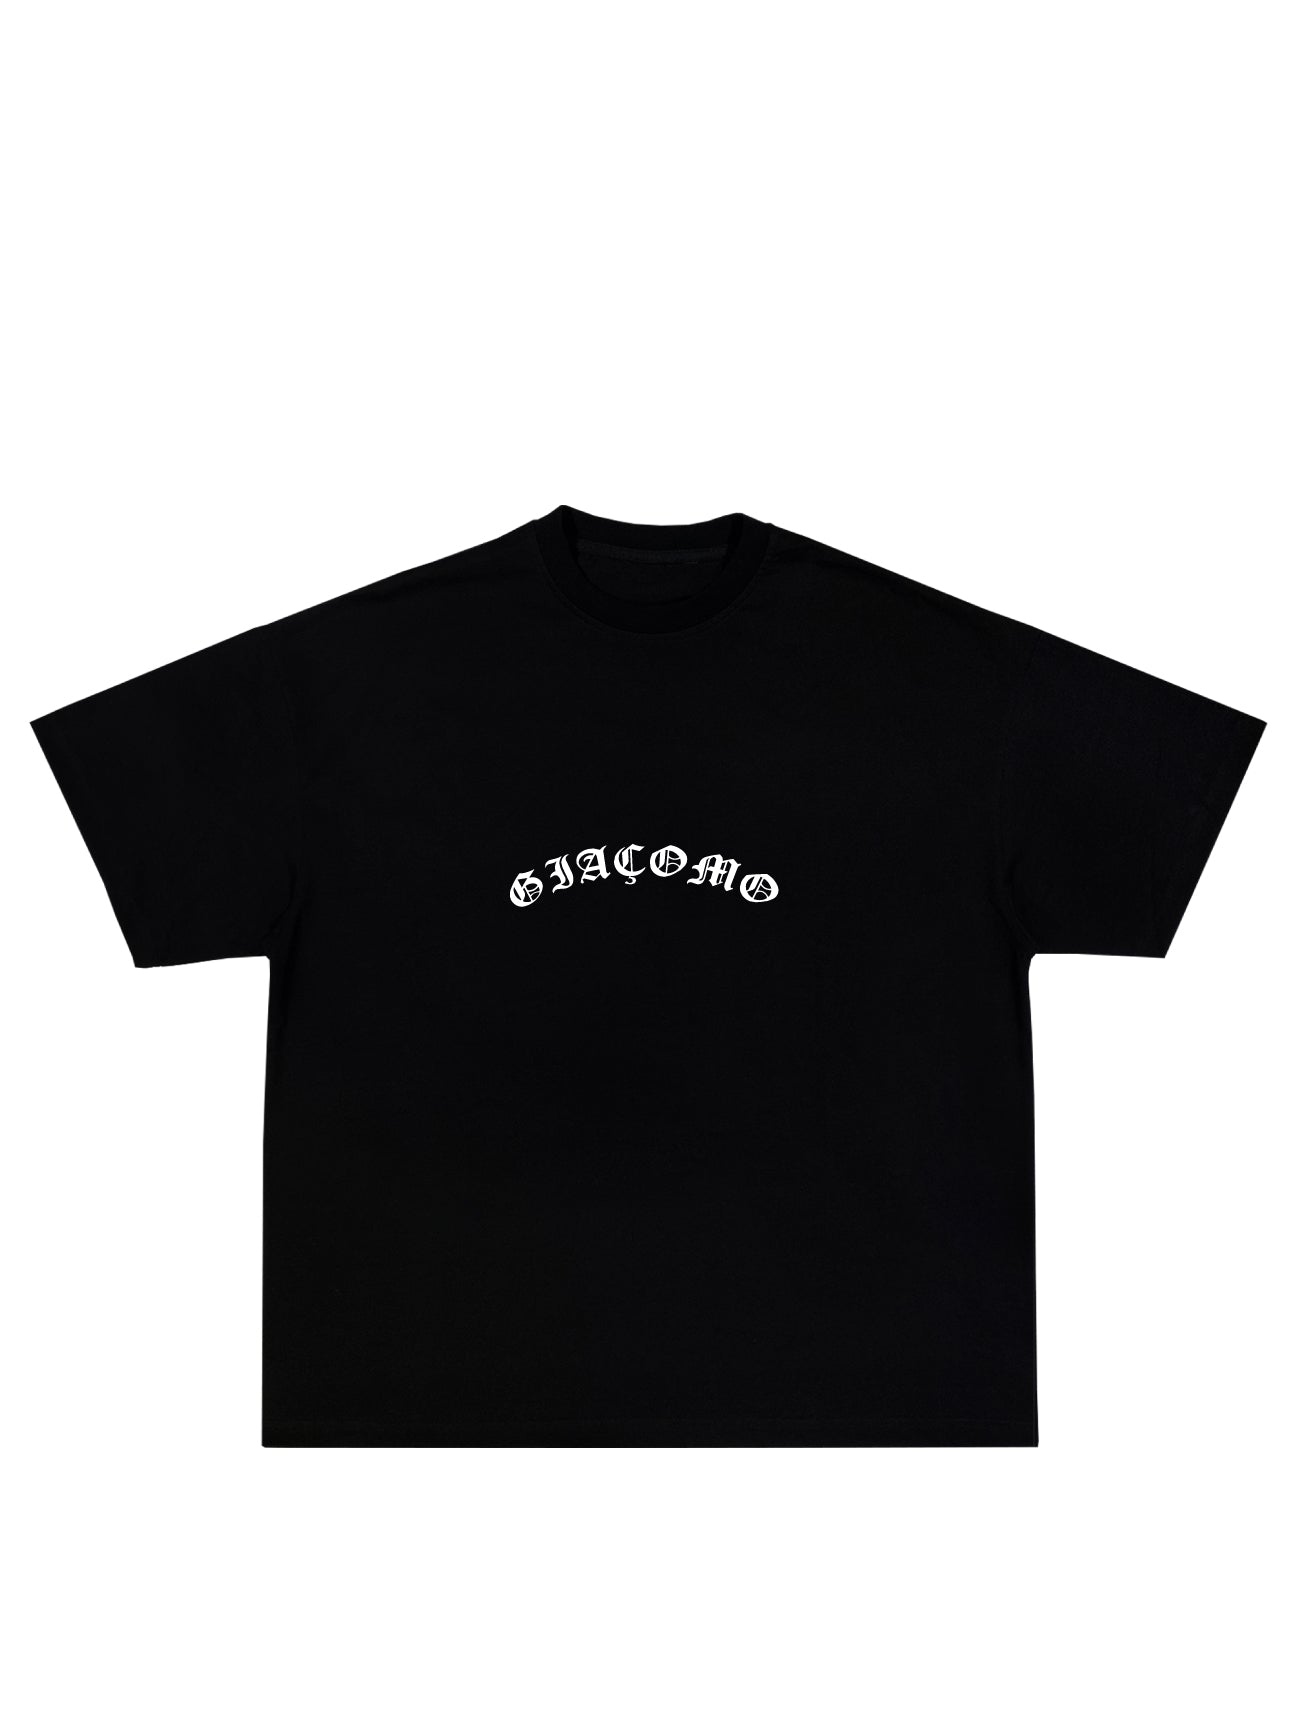 Giaçomo Black Pirate Graphic T-Shirt